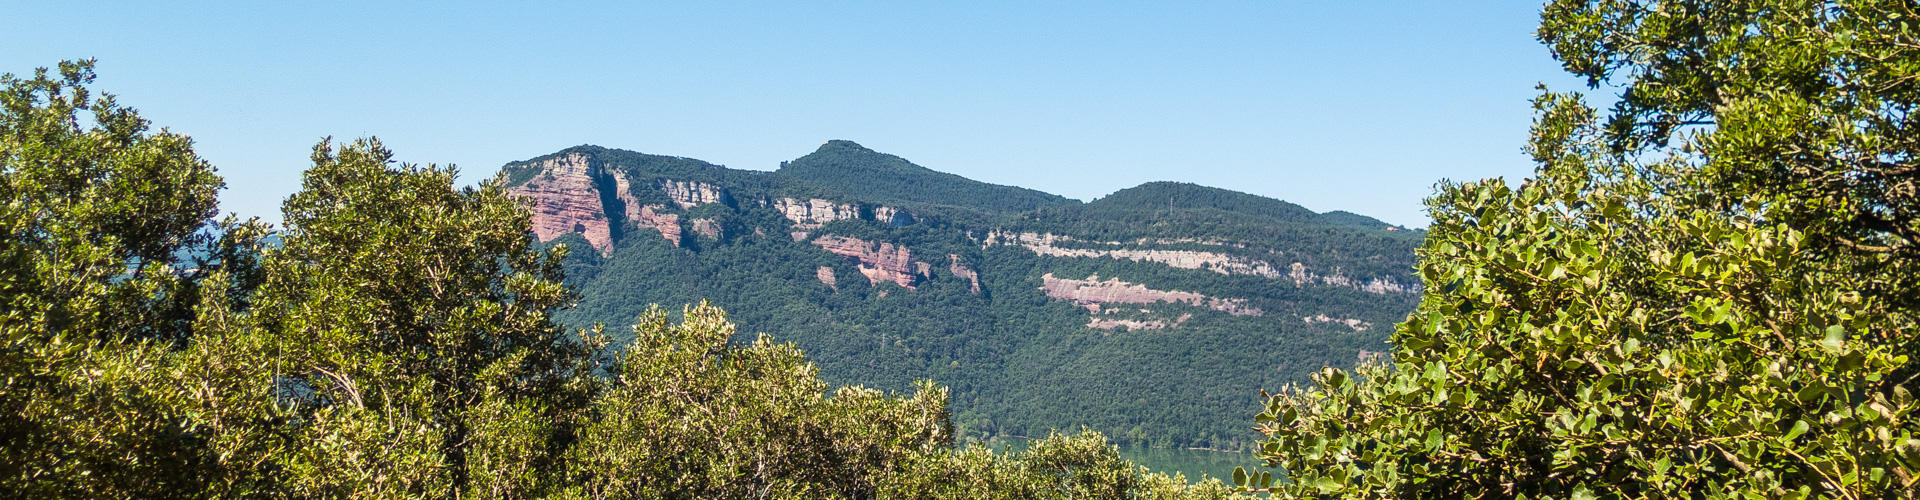 Parc Natural de les Guilleries. Vilanova de Sau.